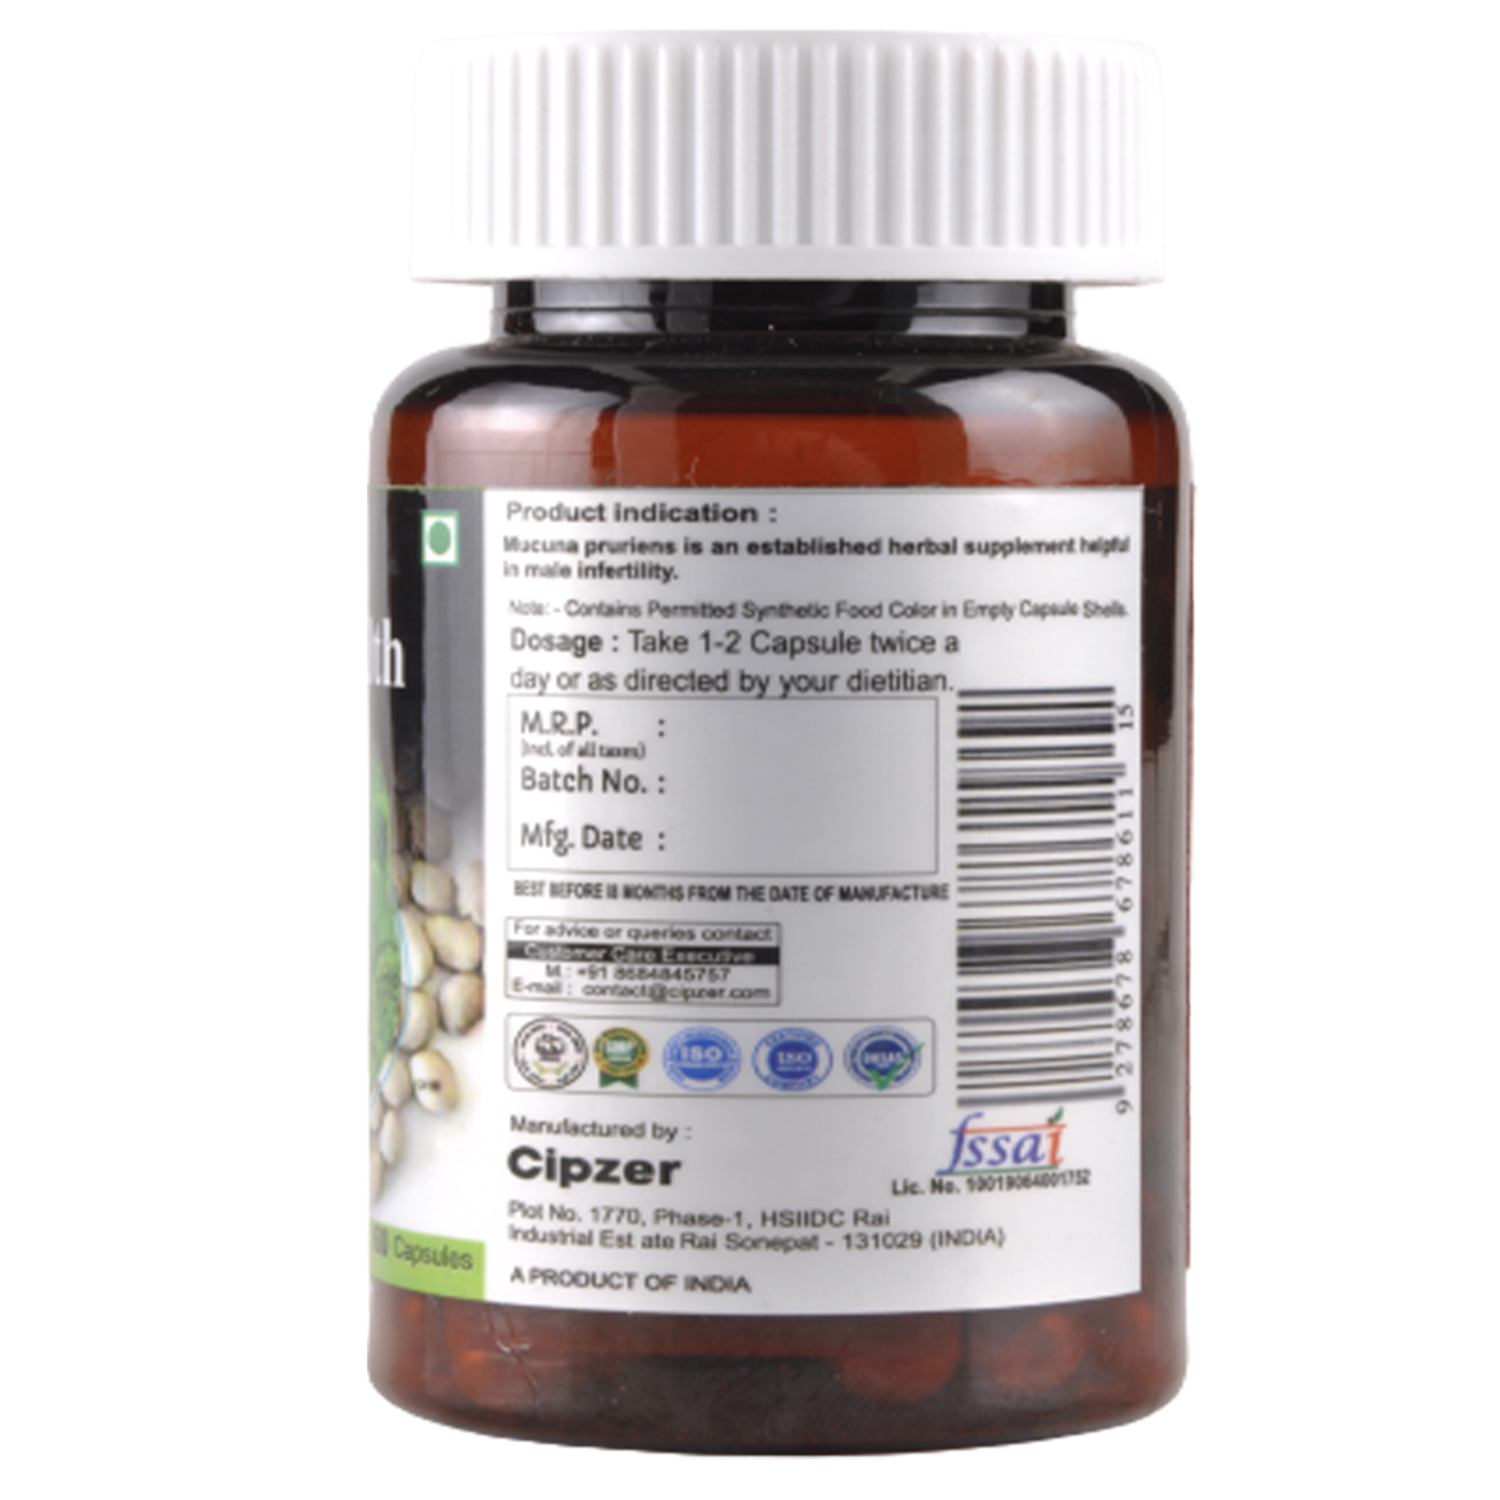 Buy Cipzer Mucuna Capsule at Best Price Online